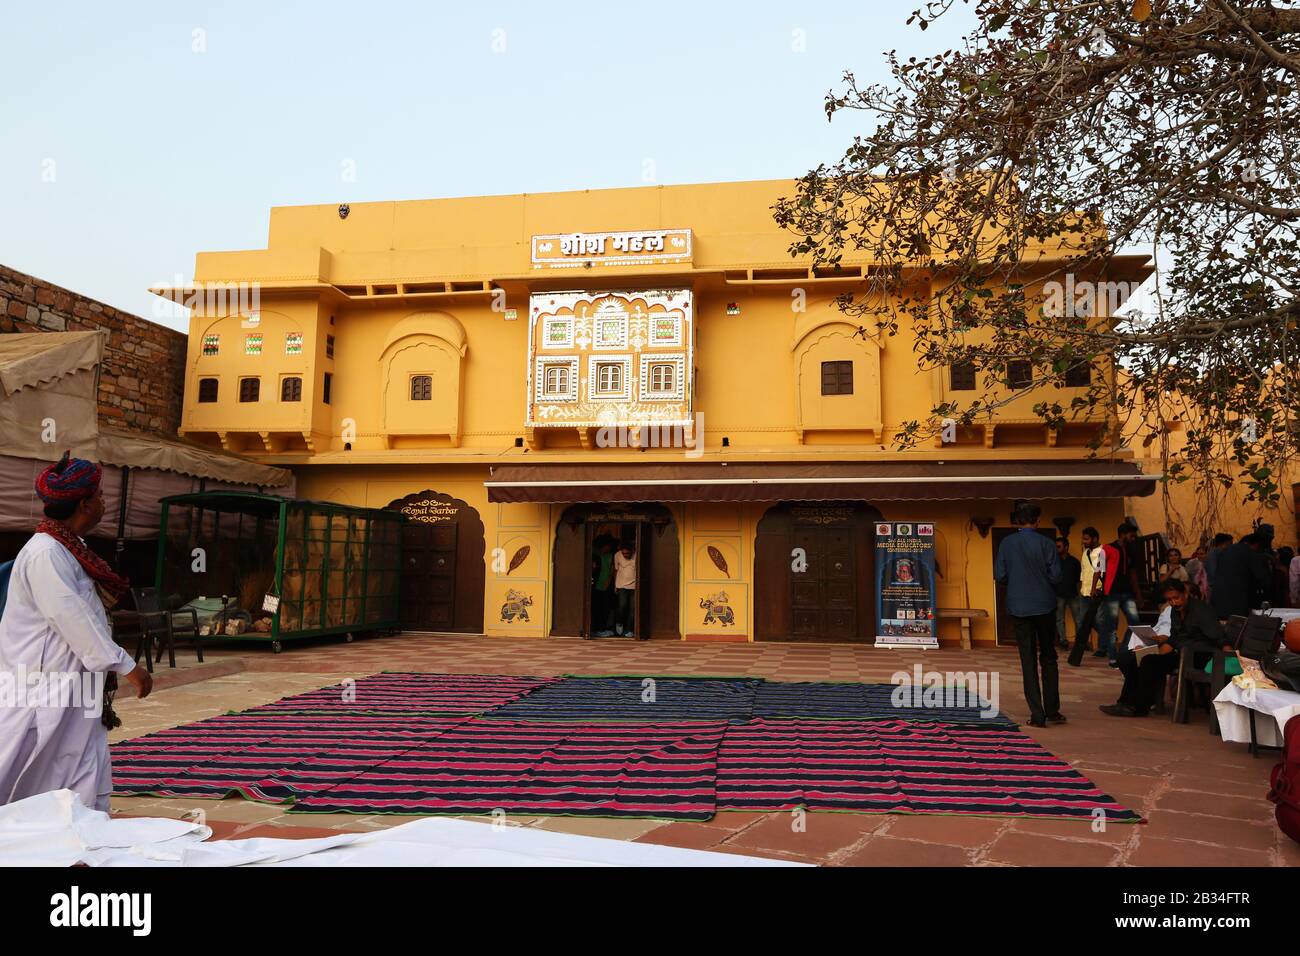 Jaipur Wax Museum and Sheesh Mahal, Jaipur, Rajasthan, India Stock Photo